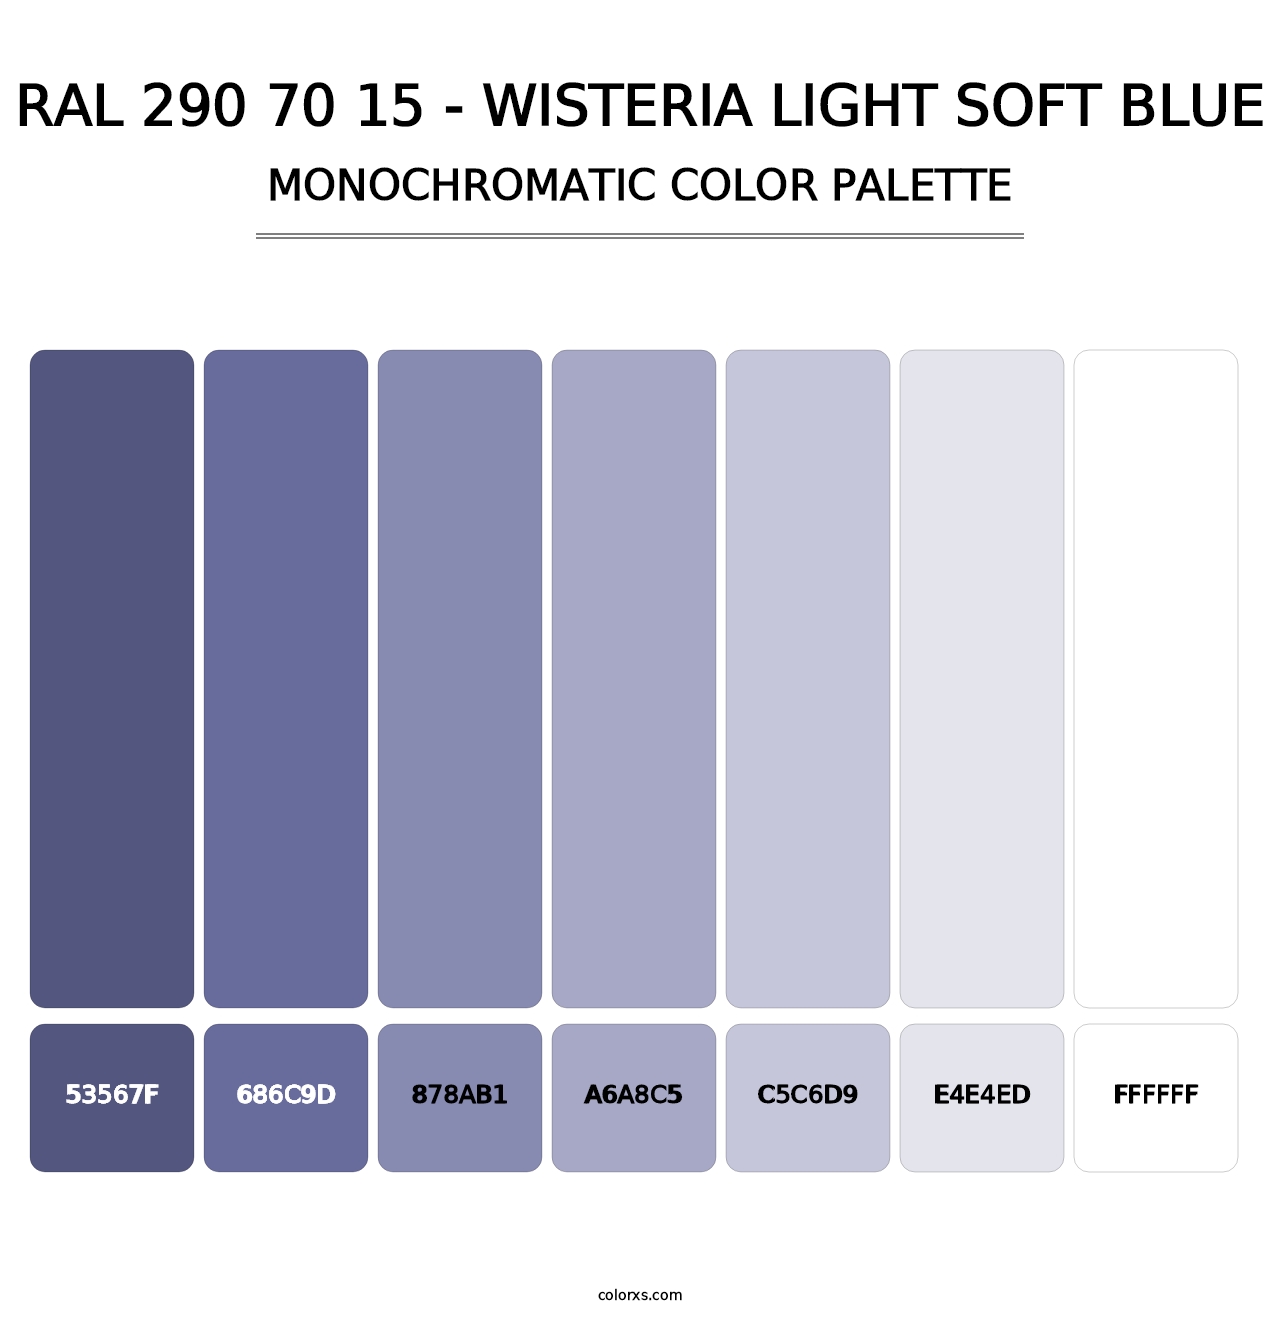 RAL 290 70 15 - Wisteria Light Soft Blue - Monochromatic Color Palette